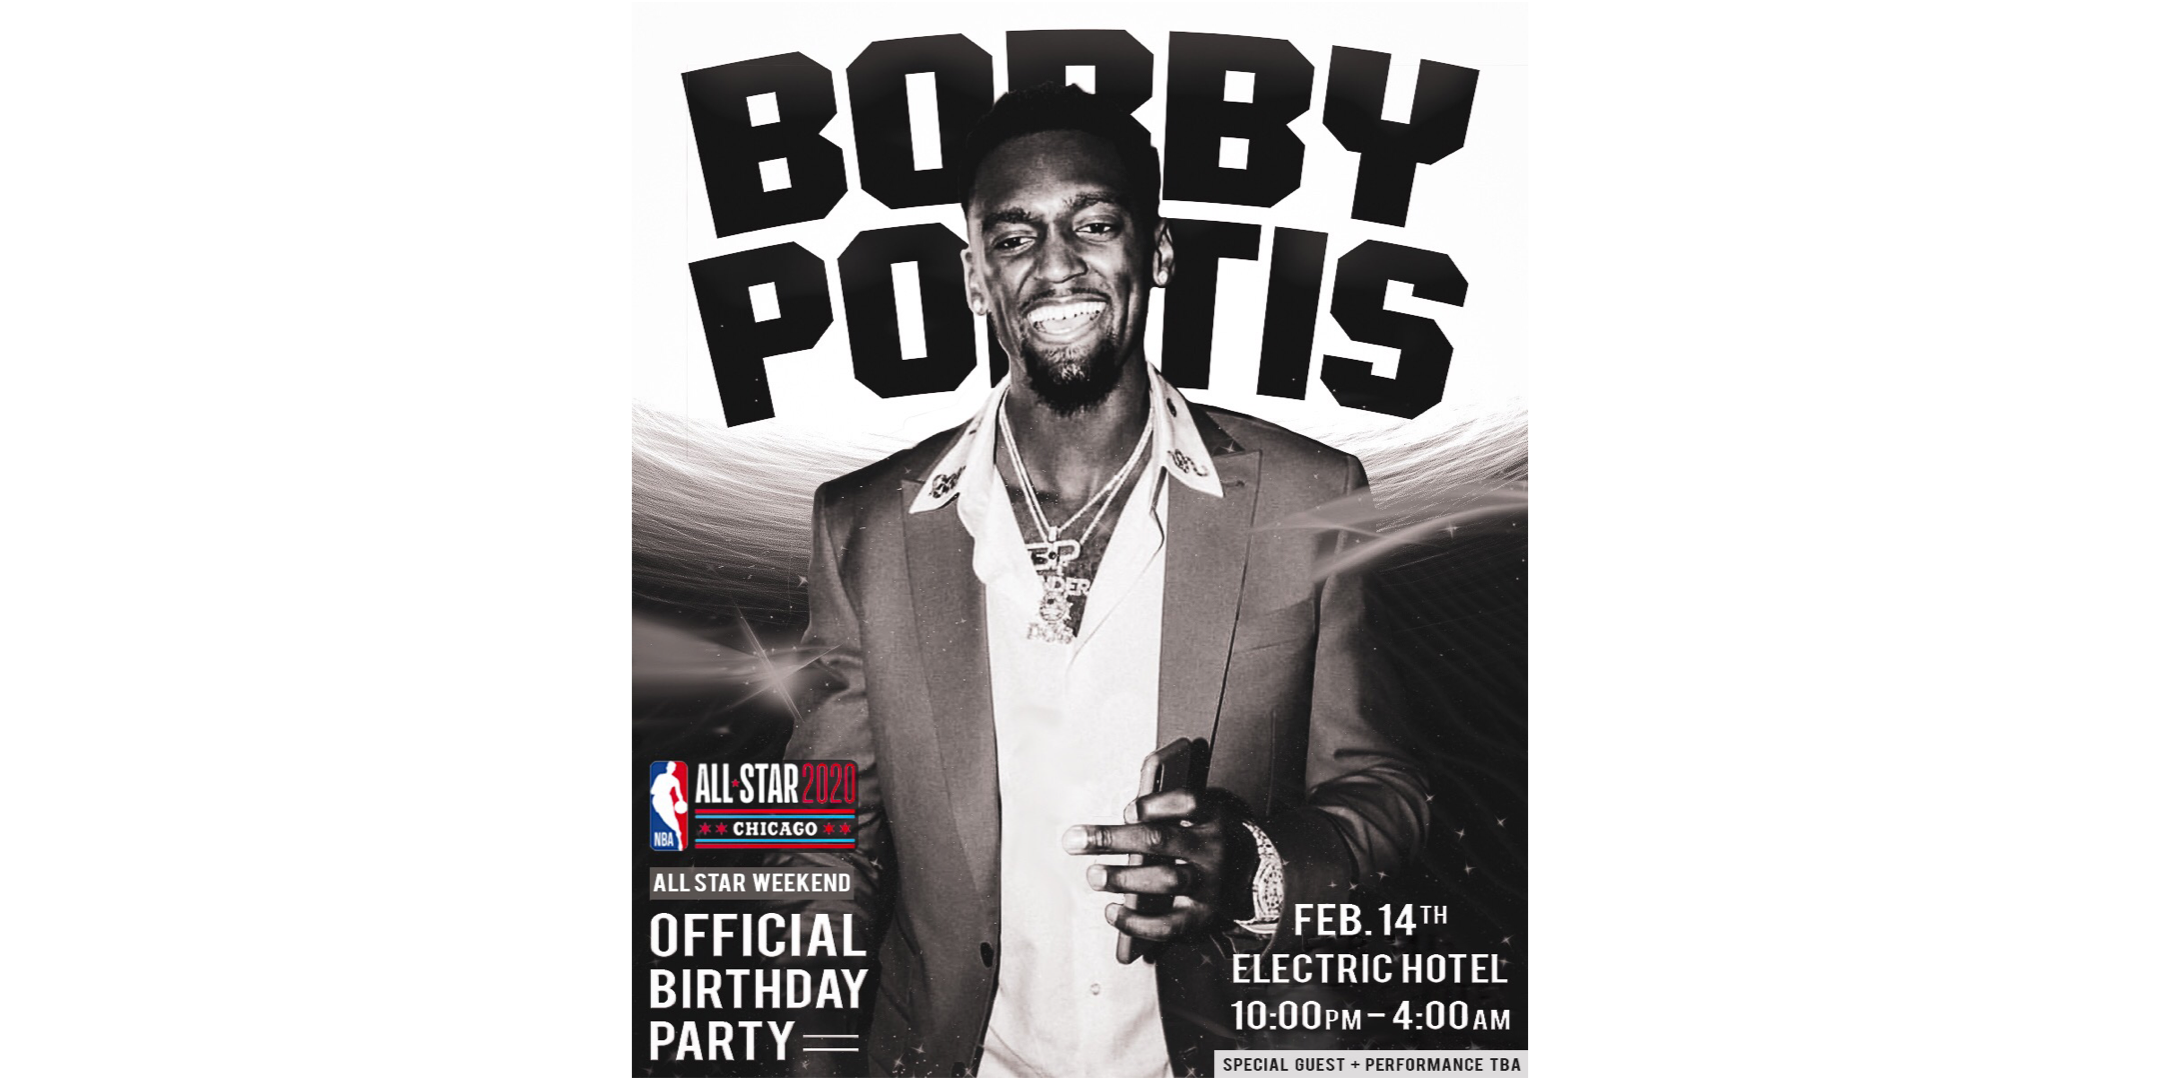 Bobby Portis Official Birthday Party Pregame